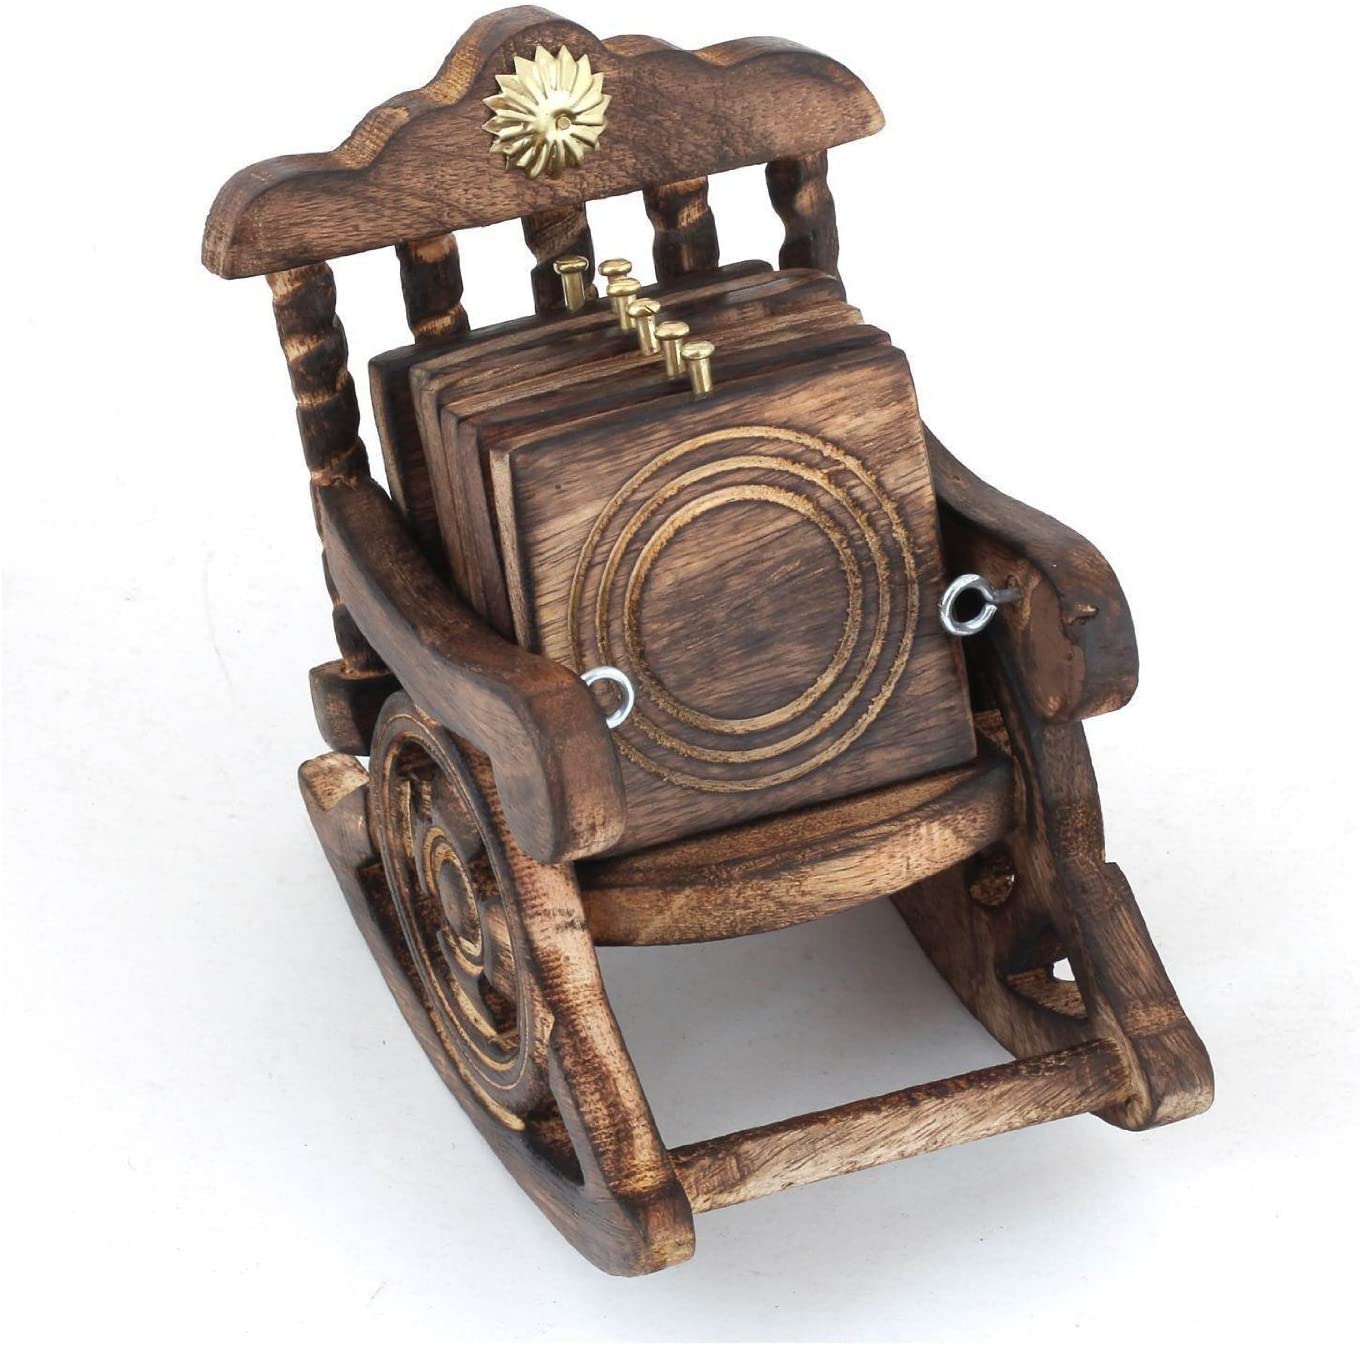 Handmade  Chair Shape Wooden Coaster Set of 6